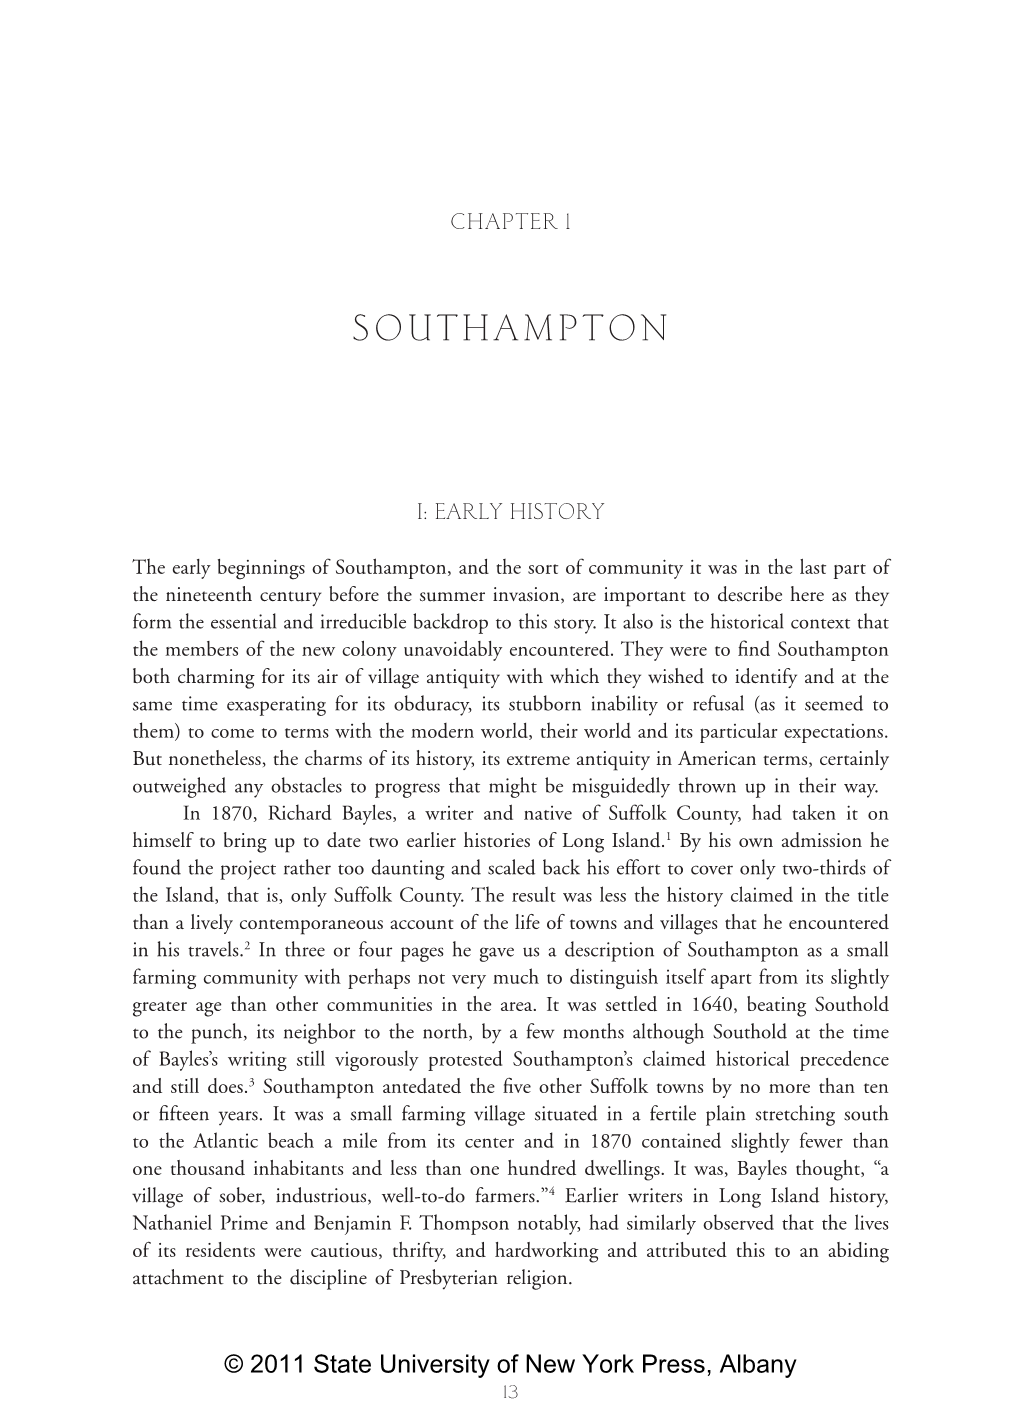 Colonizing Southampton